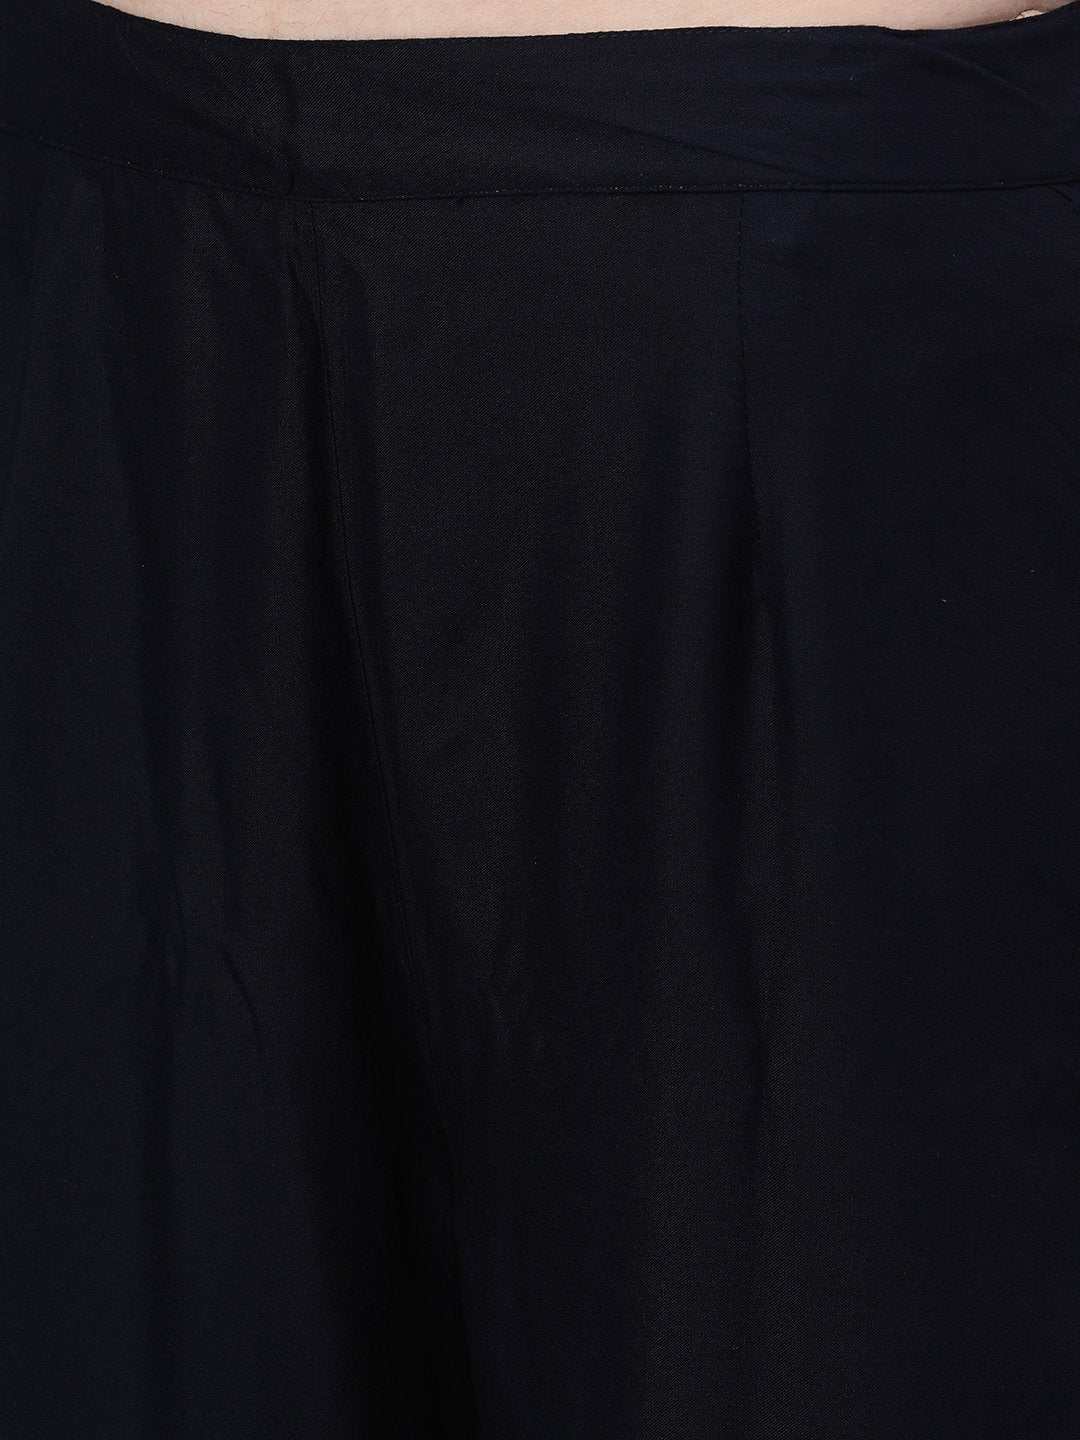 Ishin Women's Rayon Navy Blue Foil Printed Straight Kurta Palazzo Set